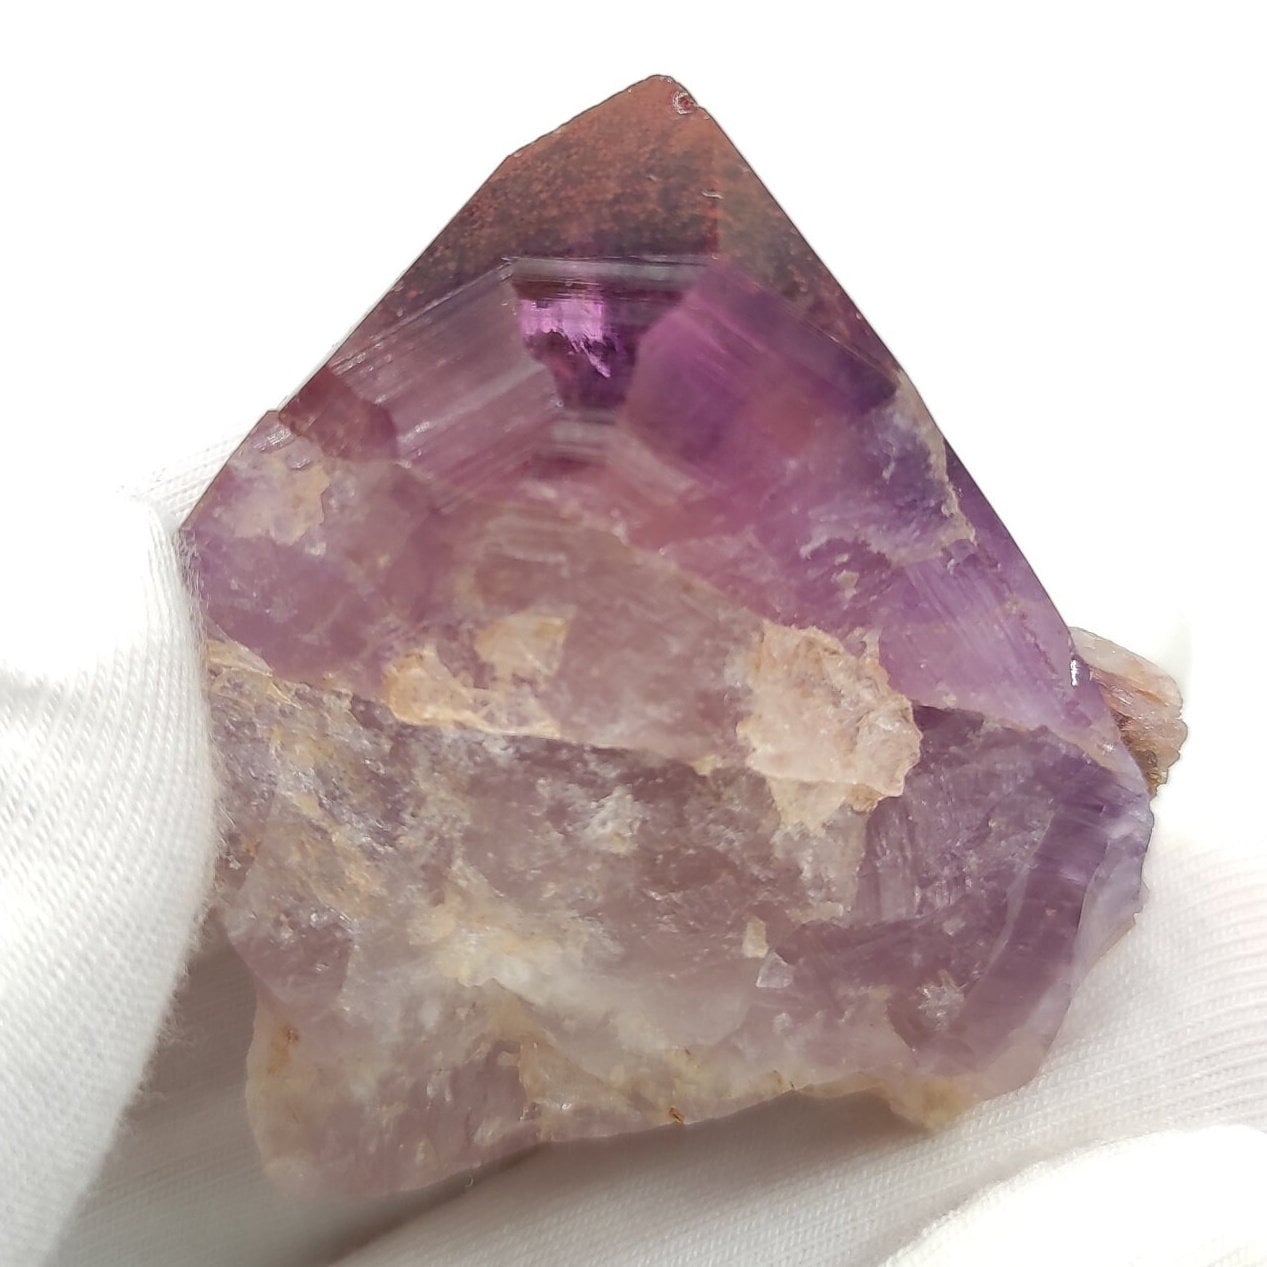 35g Mini Thunder Bay Amethyst - Hematite Amethyst - Canadian Amethyst Crystal - Hematite Included - Mini Small Pocket Crystals